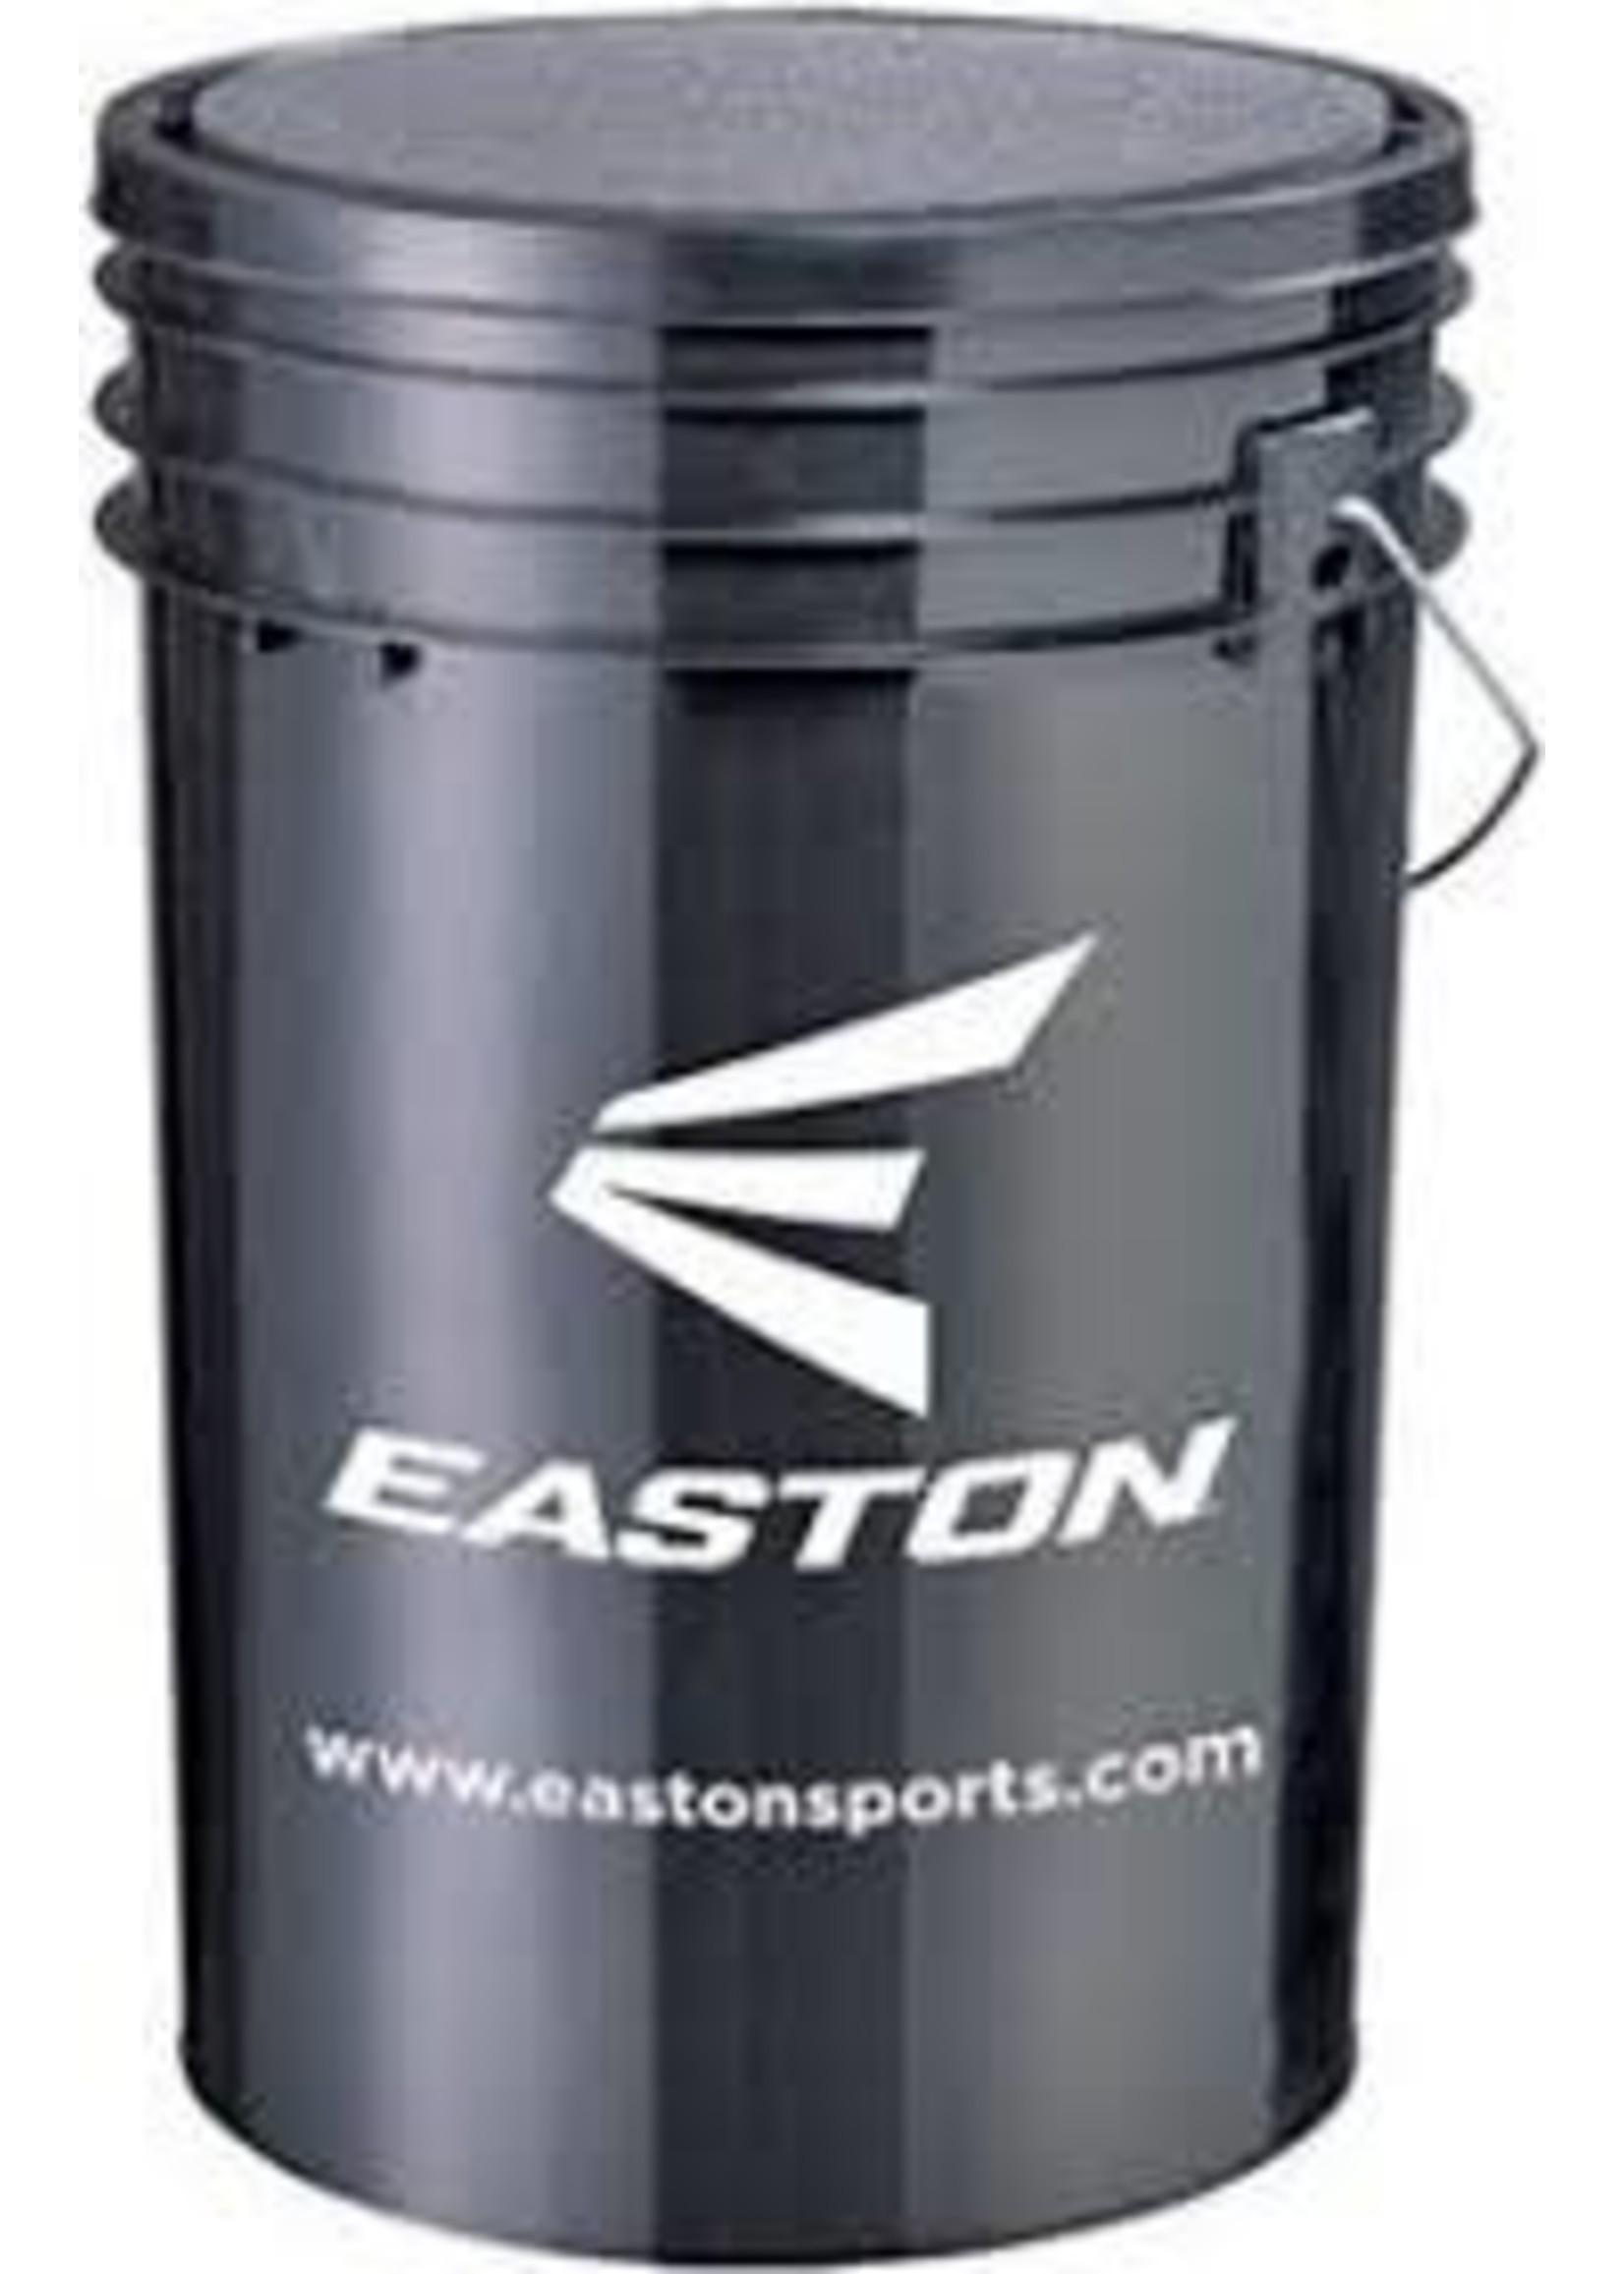 EASTON EASTON BALL BUCKET WITH 30 9" PLASTIC TRAINING BALLS